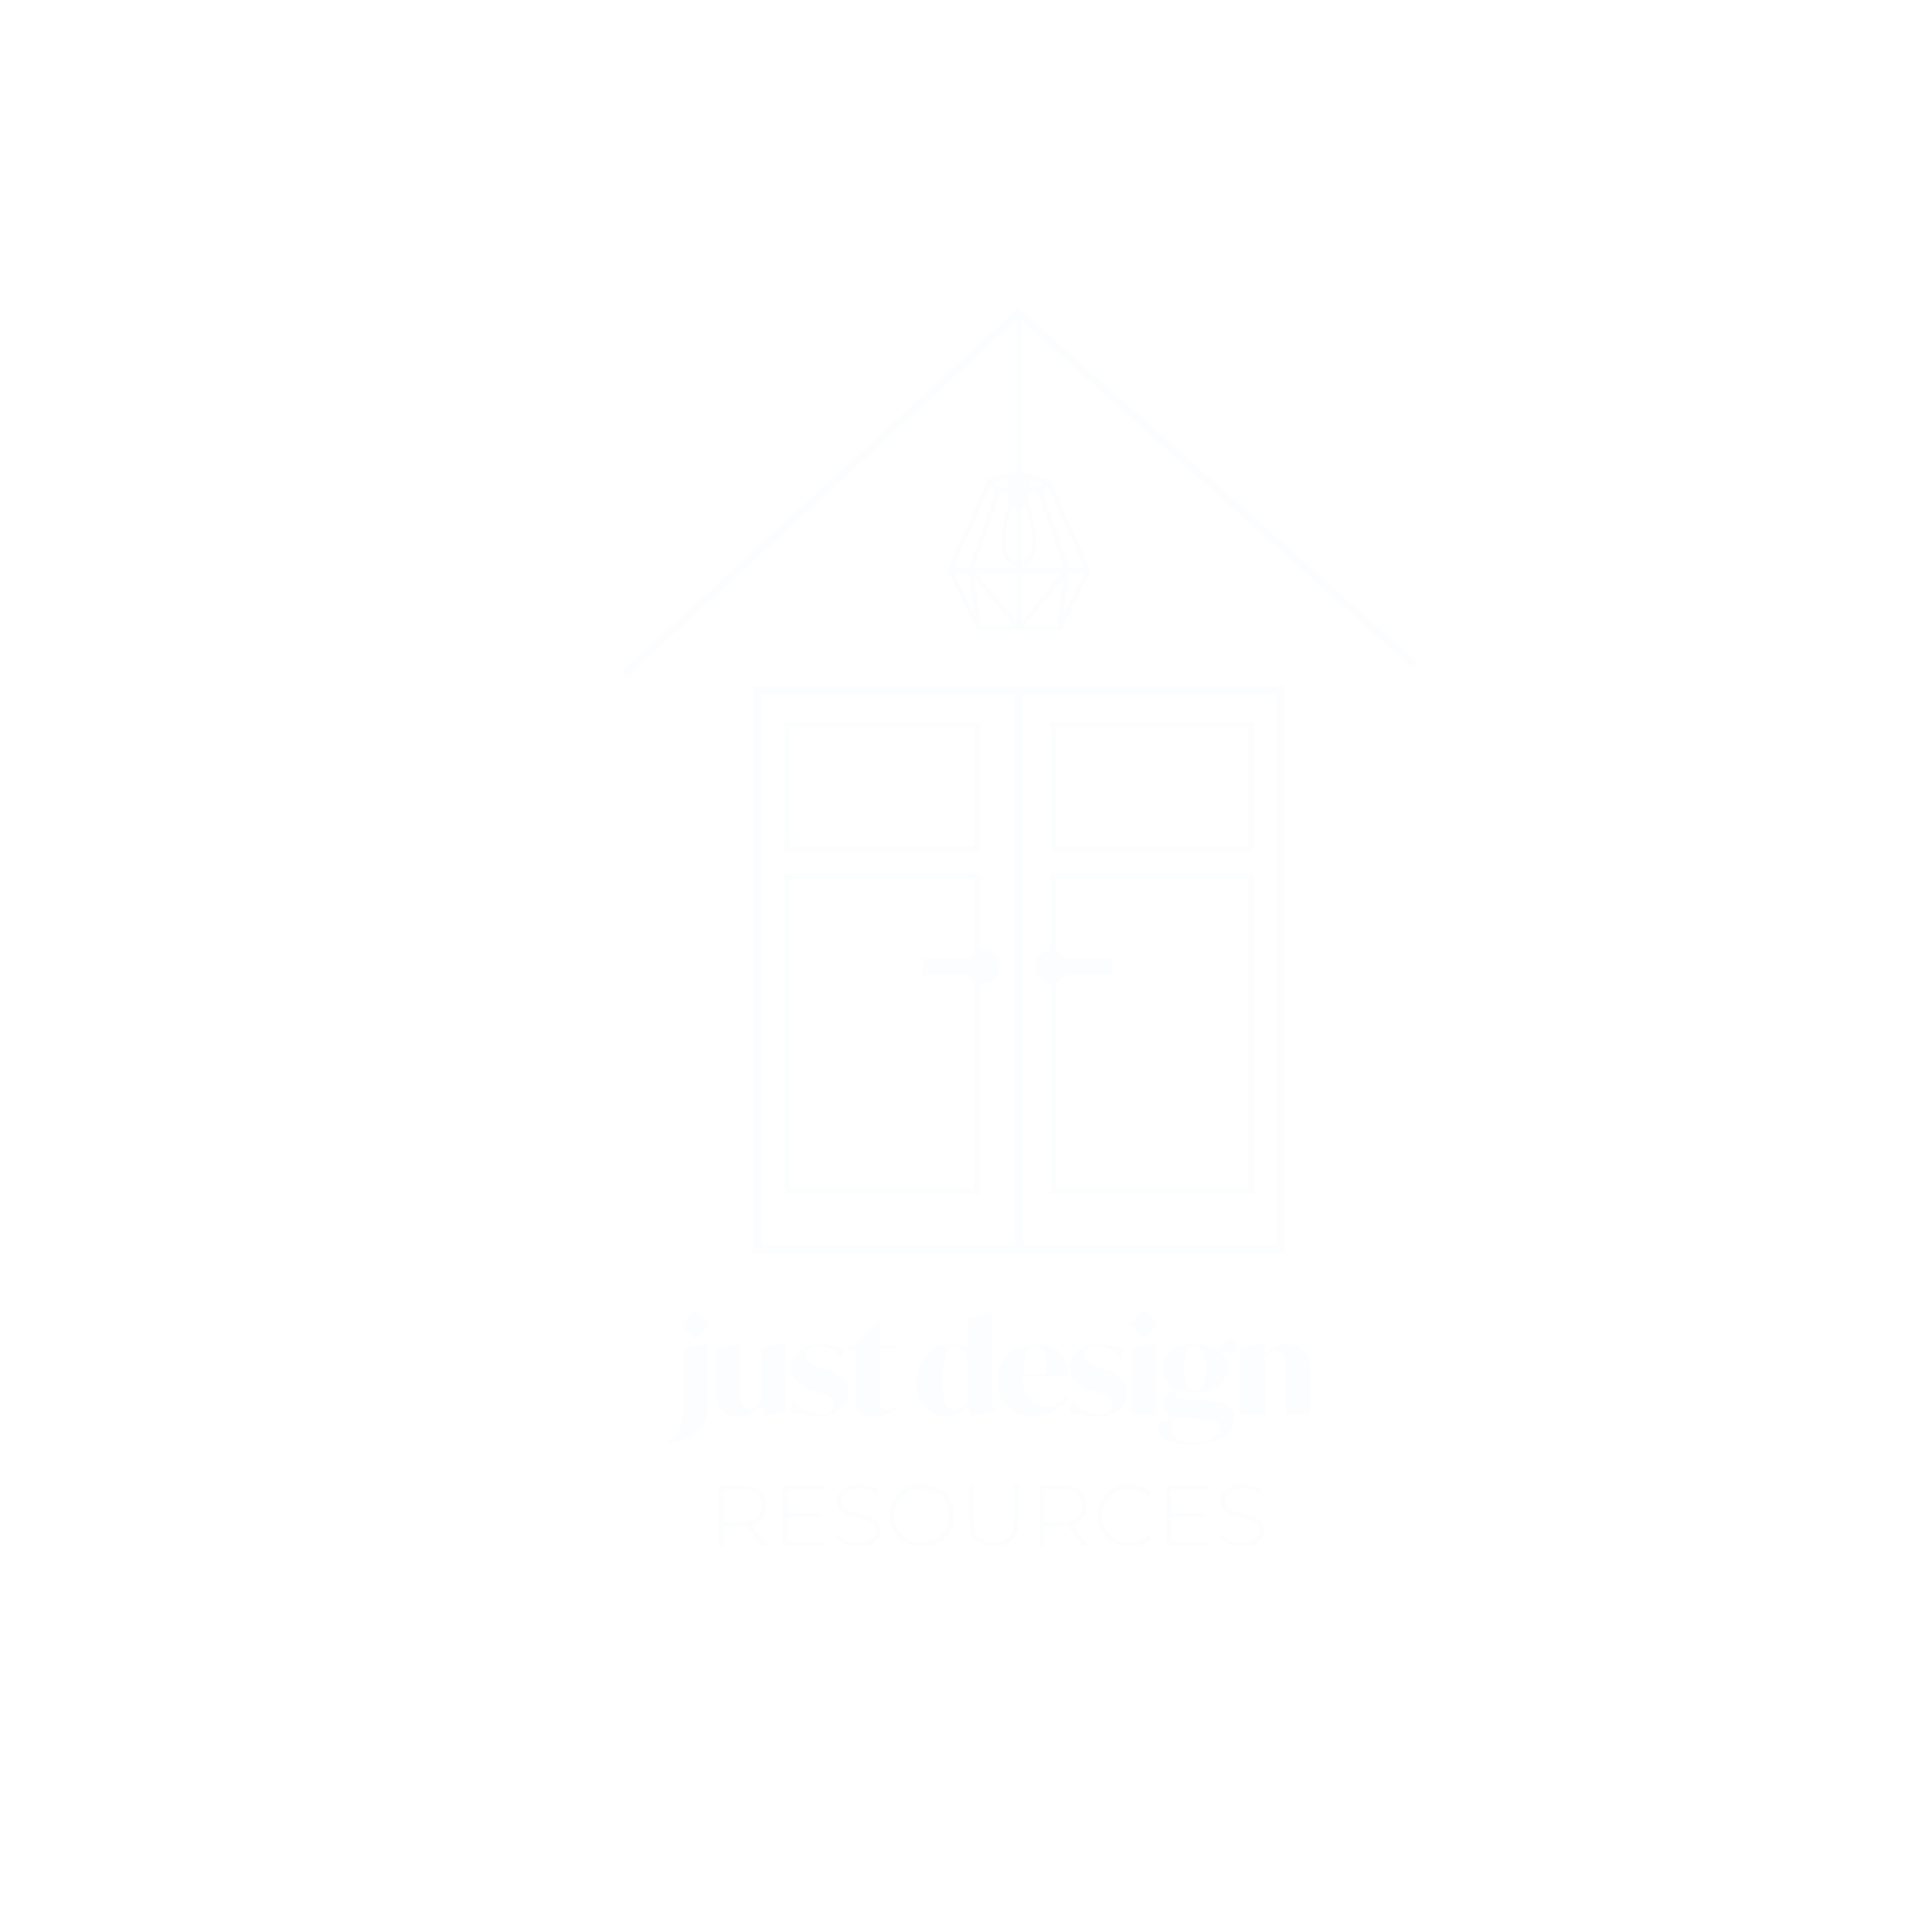 Just Design Resources